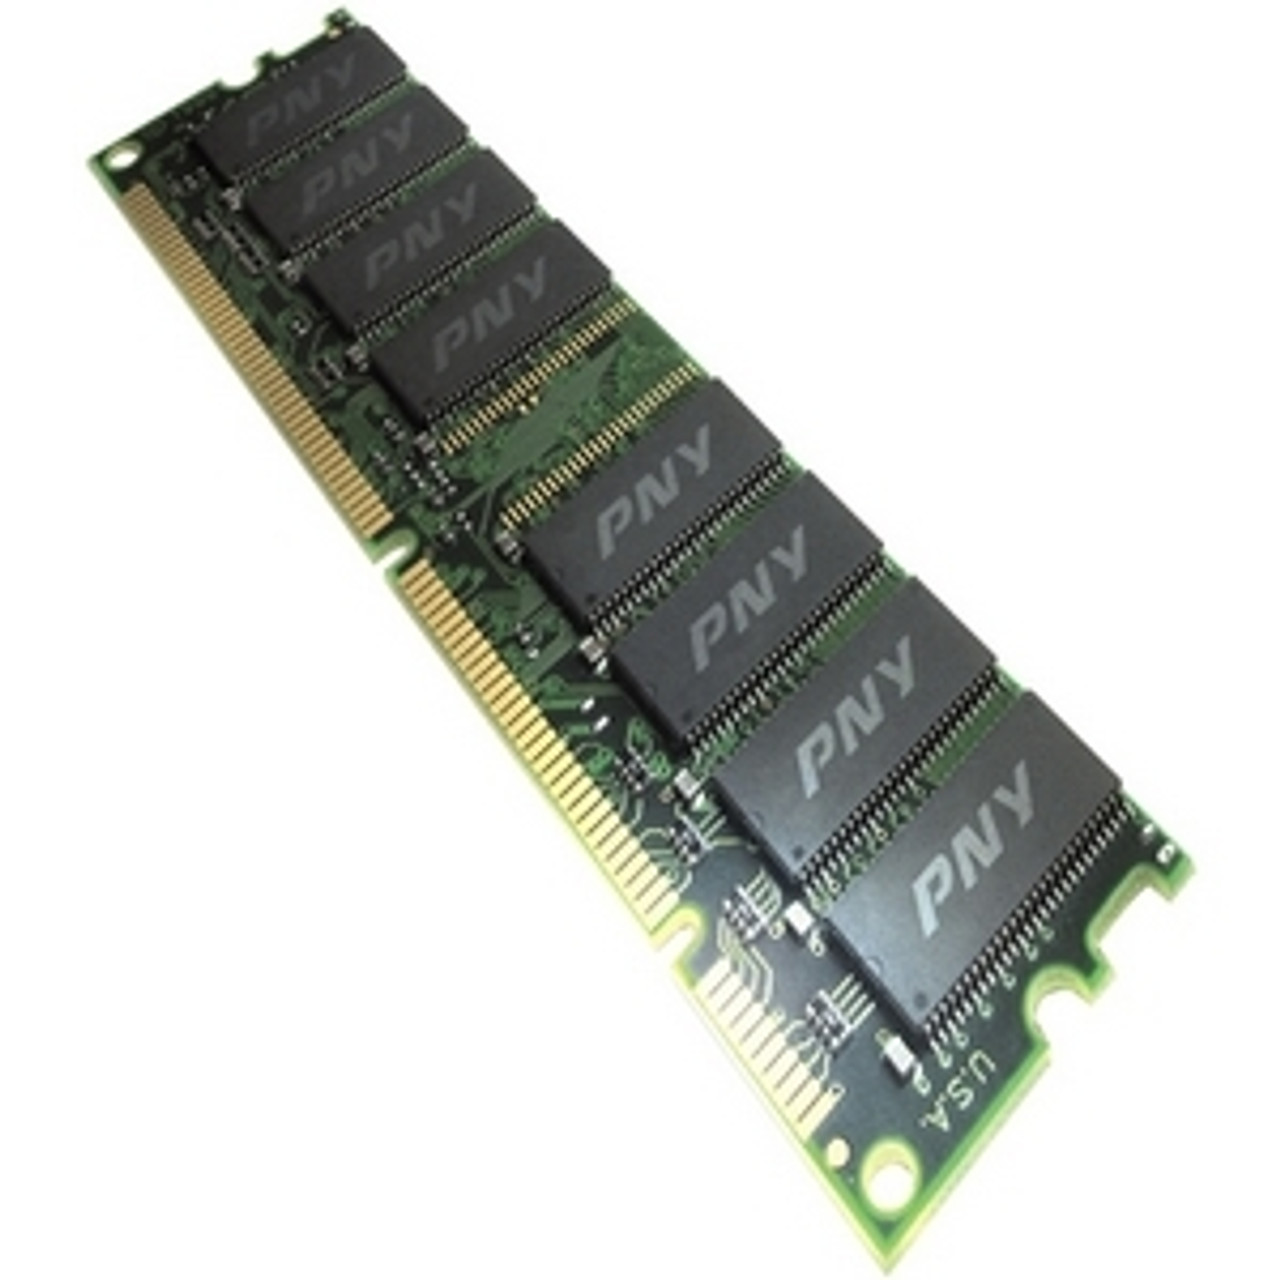 DIMM10512N/133 PNY 512MB SDRAM Memory Module